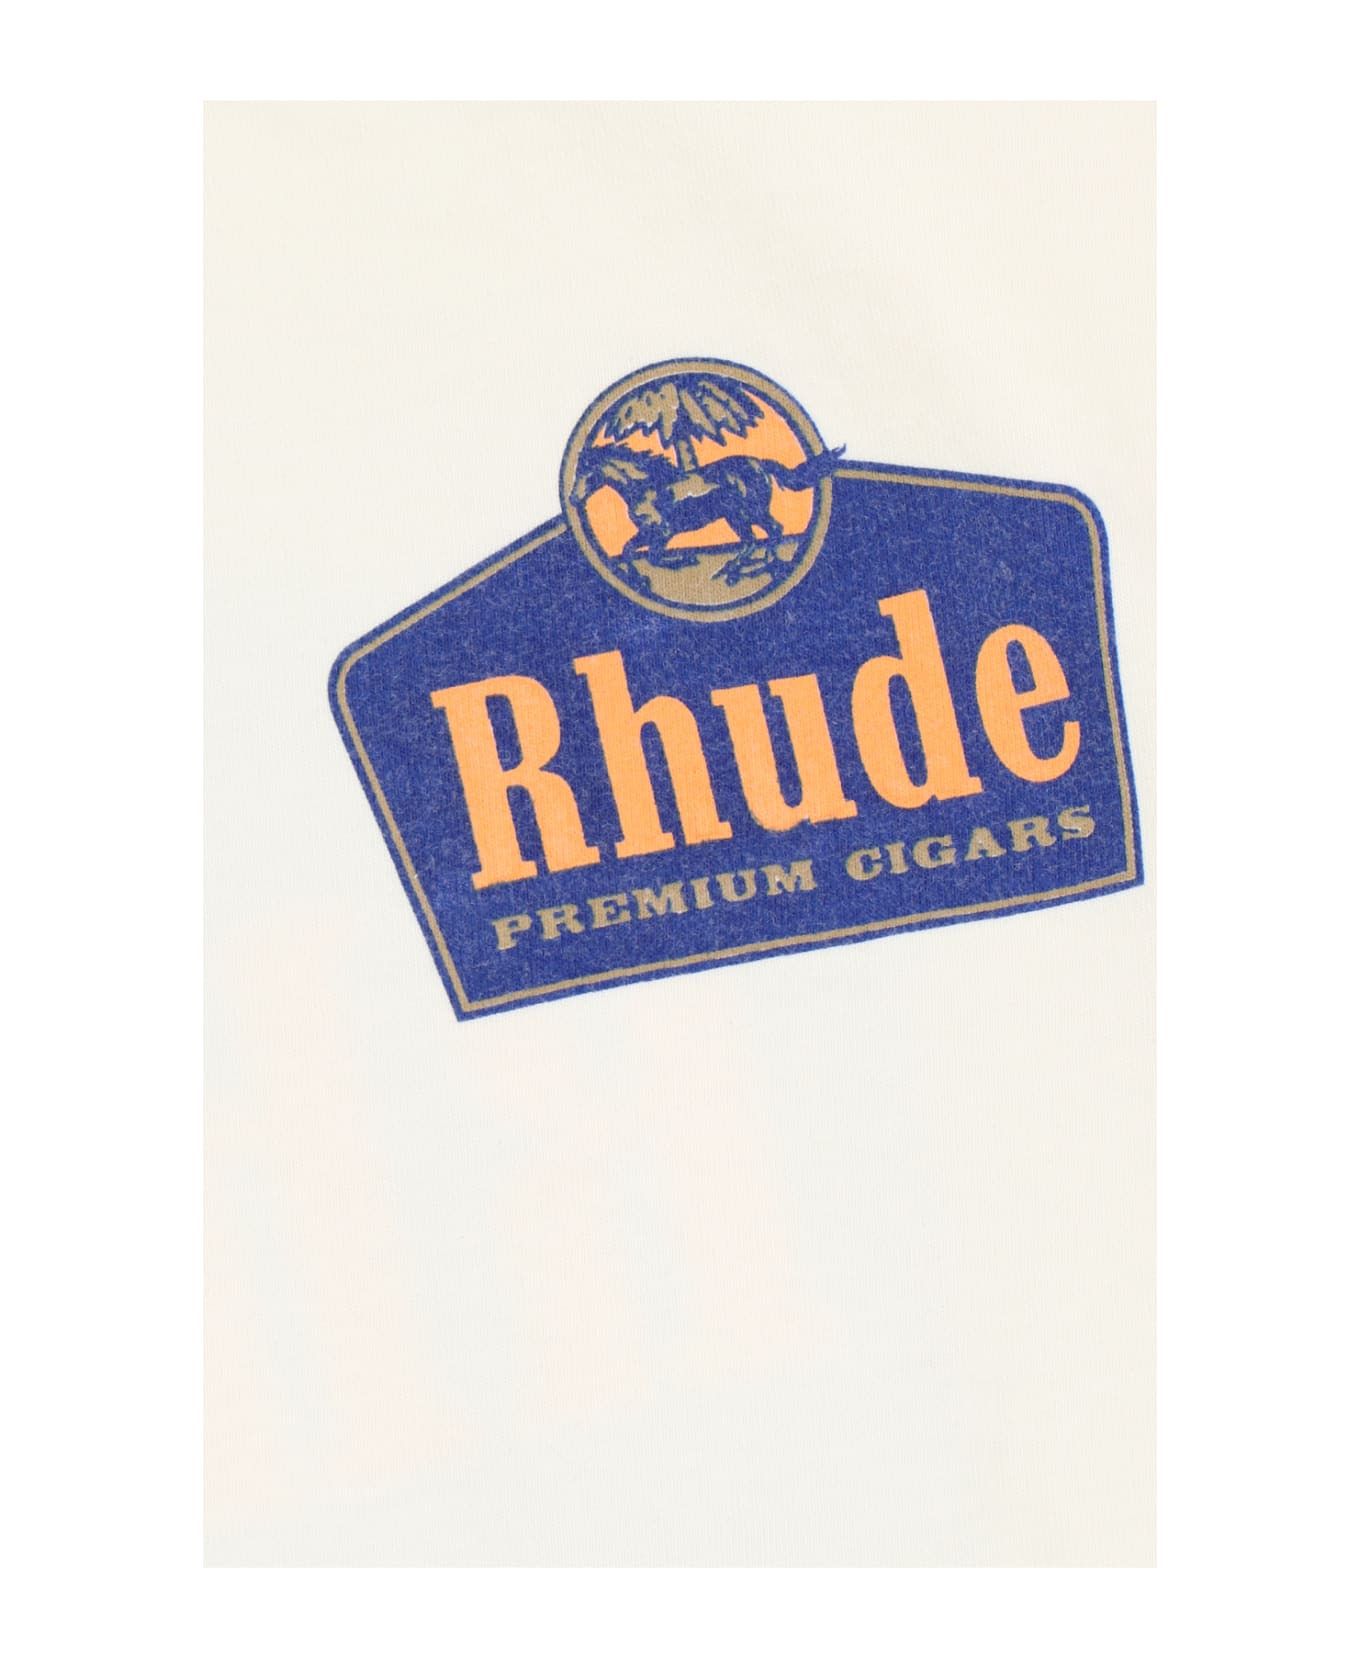 Rhude 'grand-cru' T-shirt - Crema シャツ